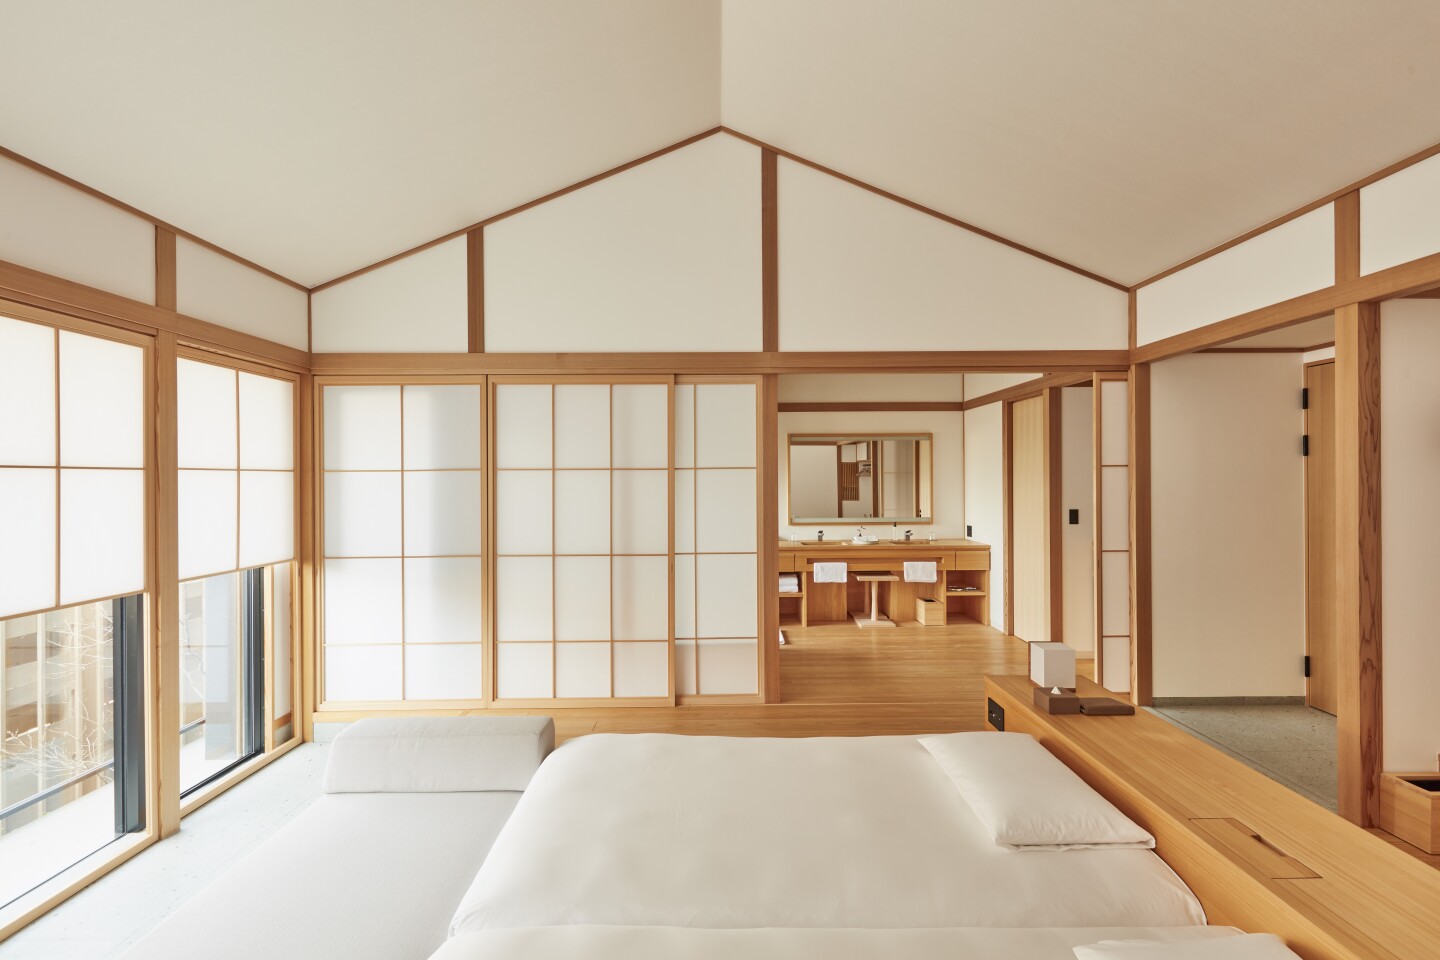 Azumi Setoda was designed by Kyoto-based architect Shiro Miura.